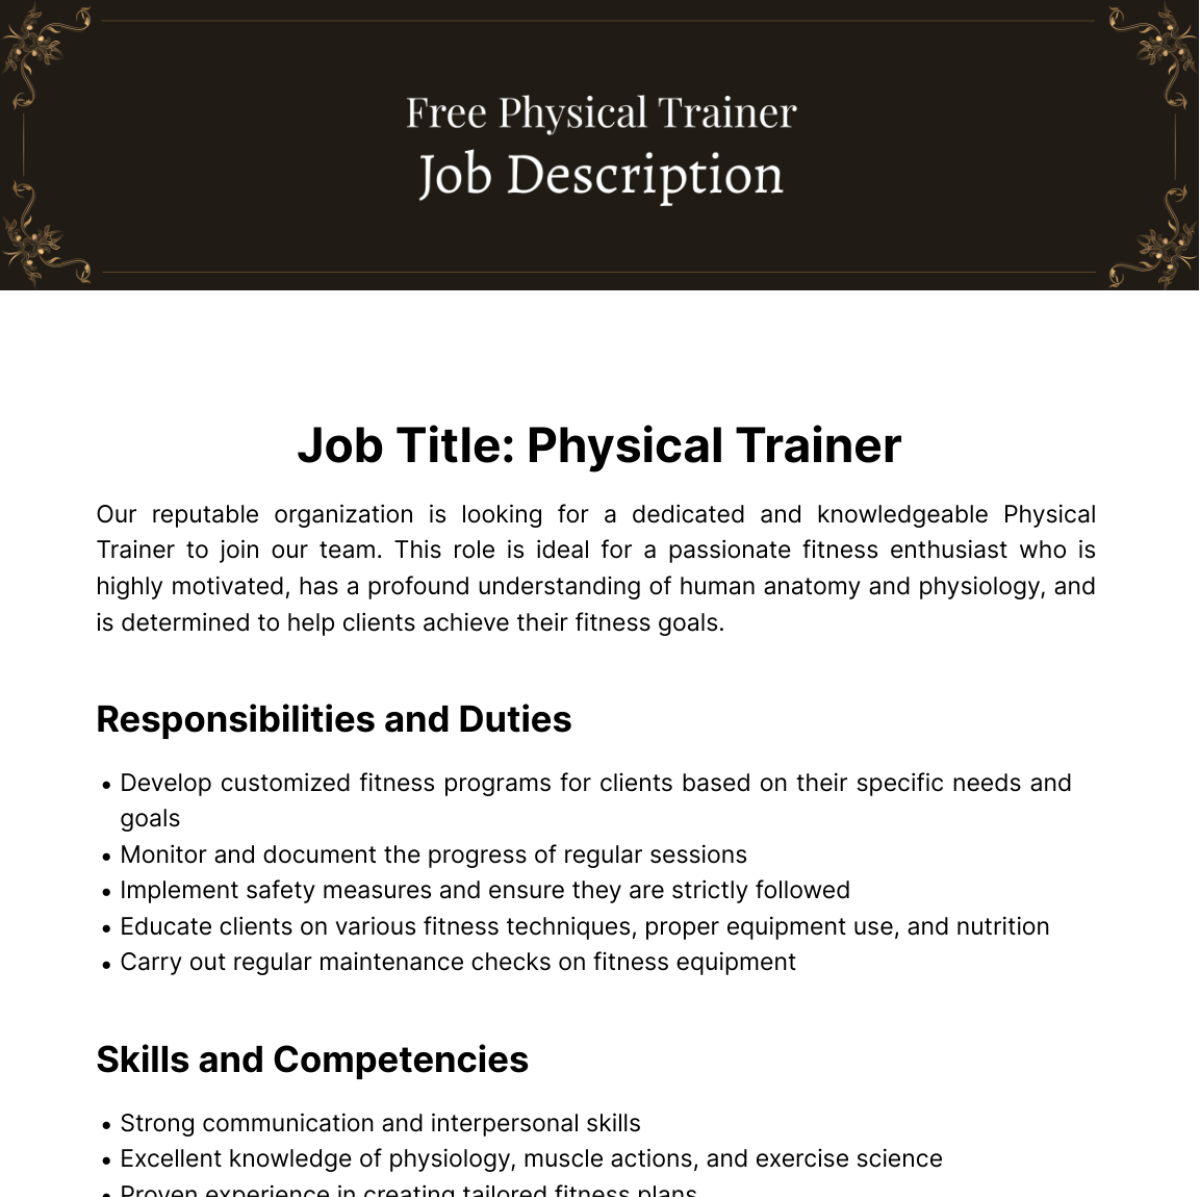 Physical Training Job Description Template